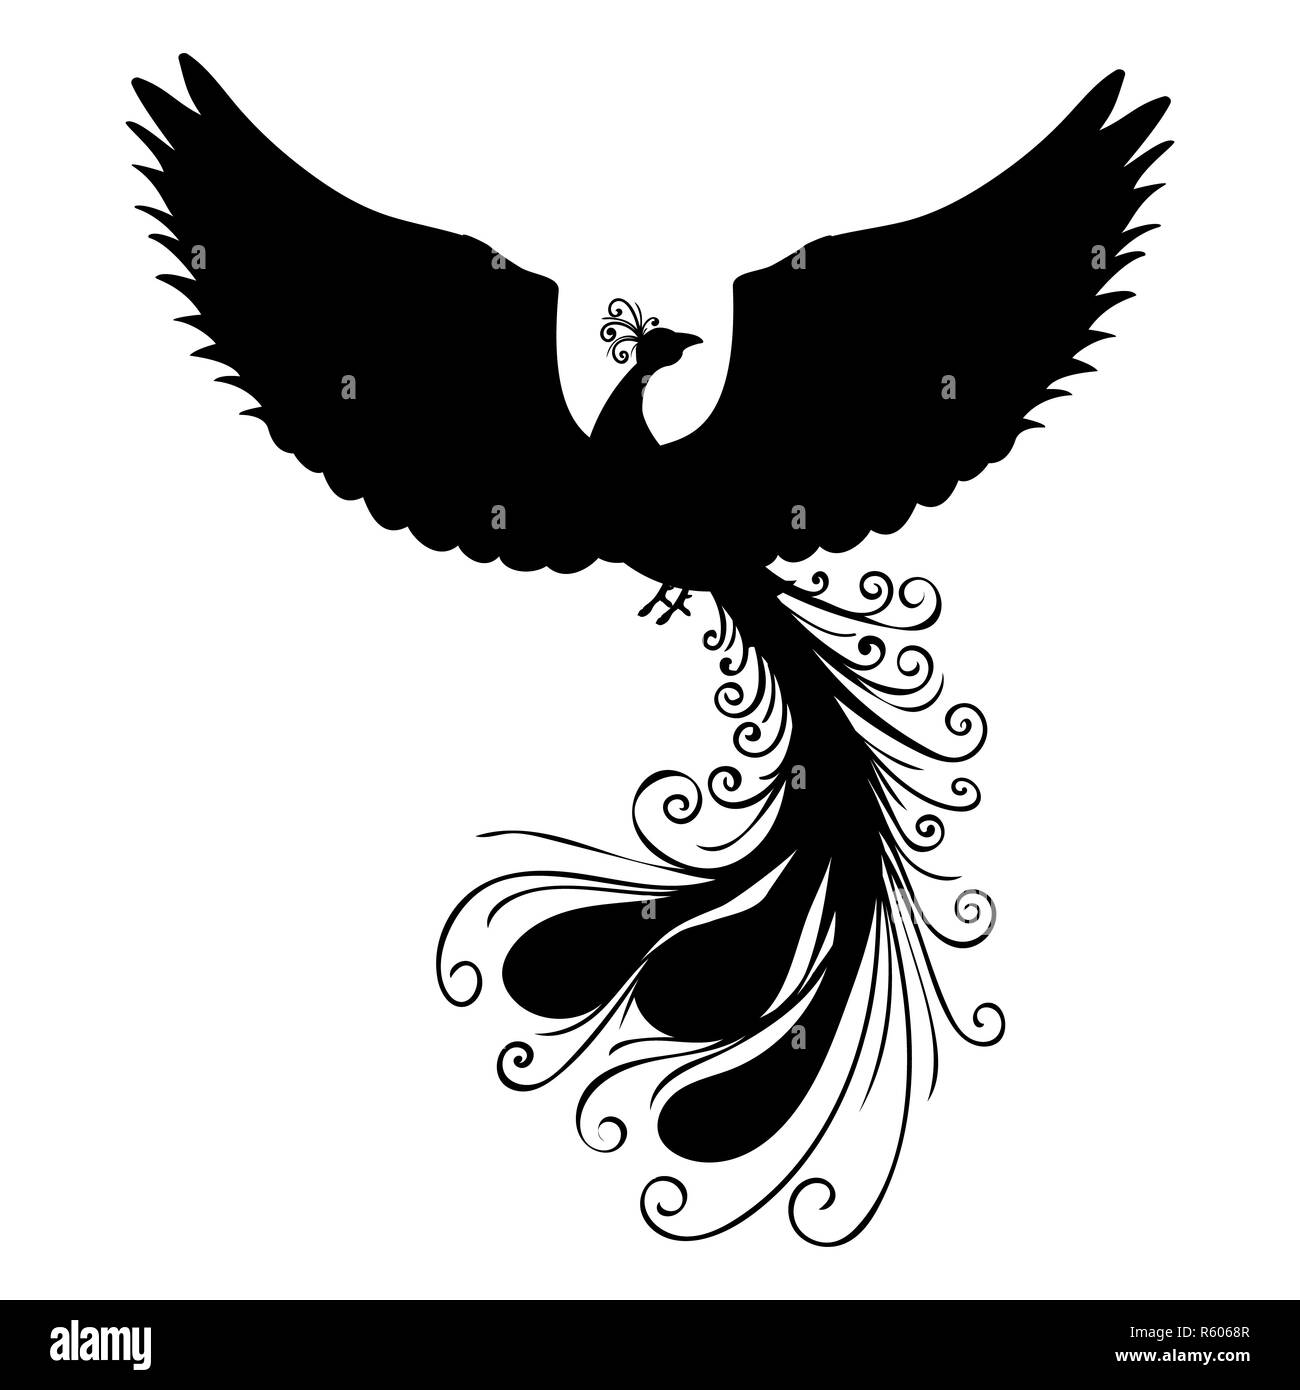 Phoenix bird silhouette ancient mythology fantasy Stock Photo